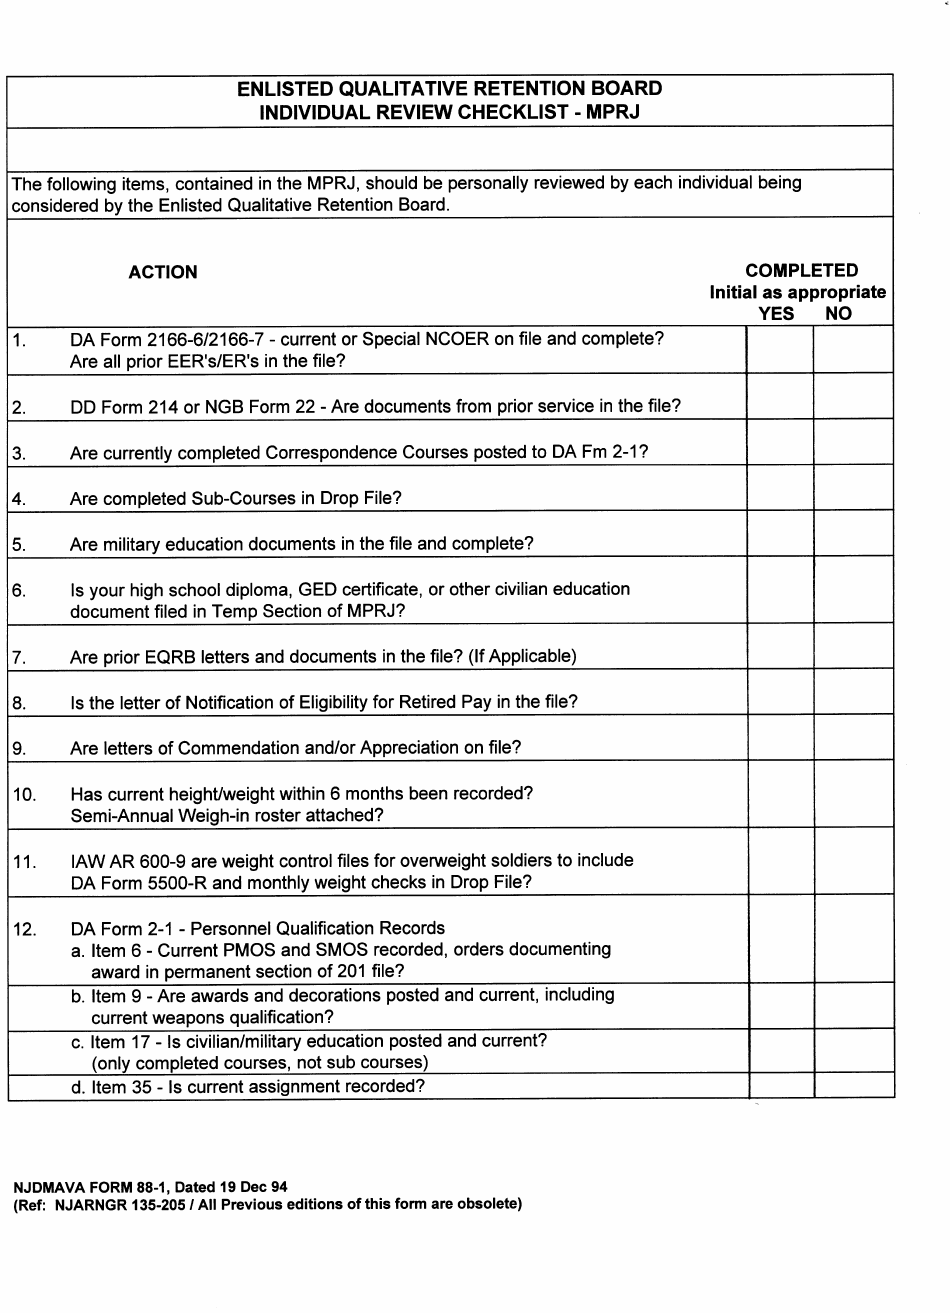 NJDMAVA Form 88-1 Individual Review Checklist - Mrpj - New Jersey, Page 1